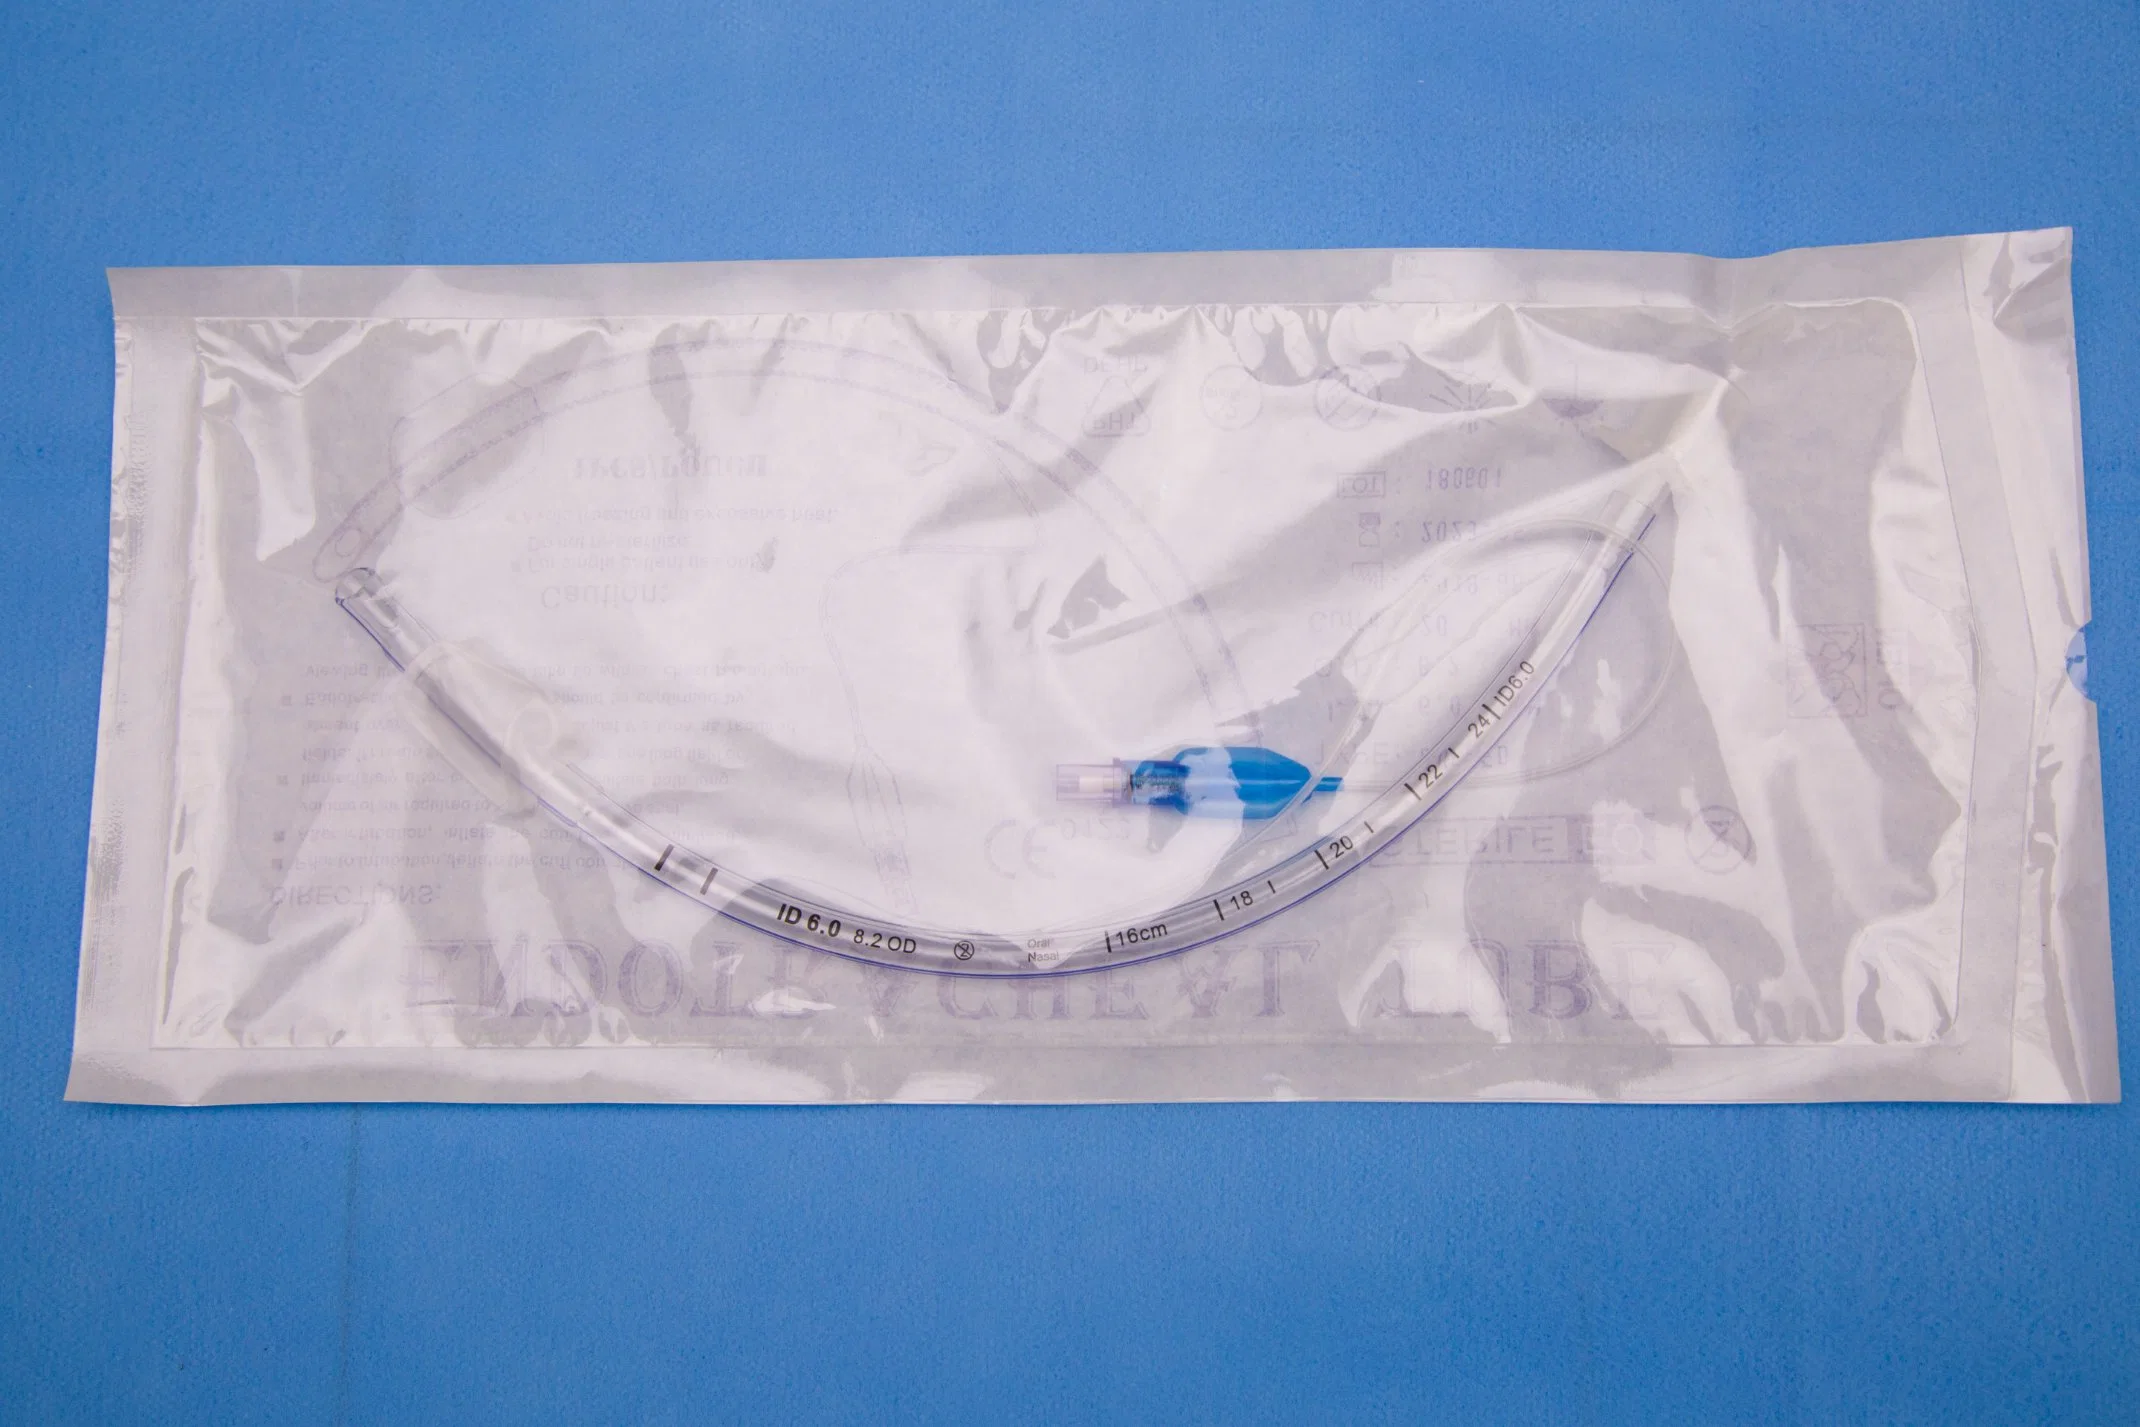 Hot Sale Plastic 20PCS/Box Carton Single Packed Medical Disposable Sterile Endotracheal